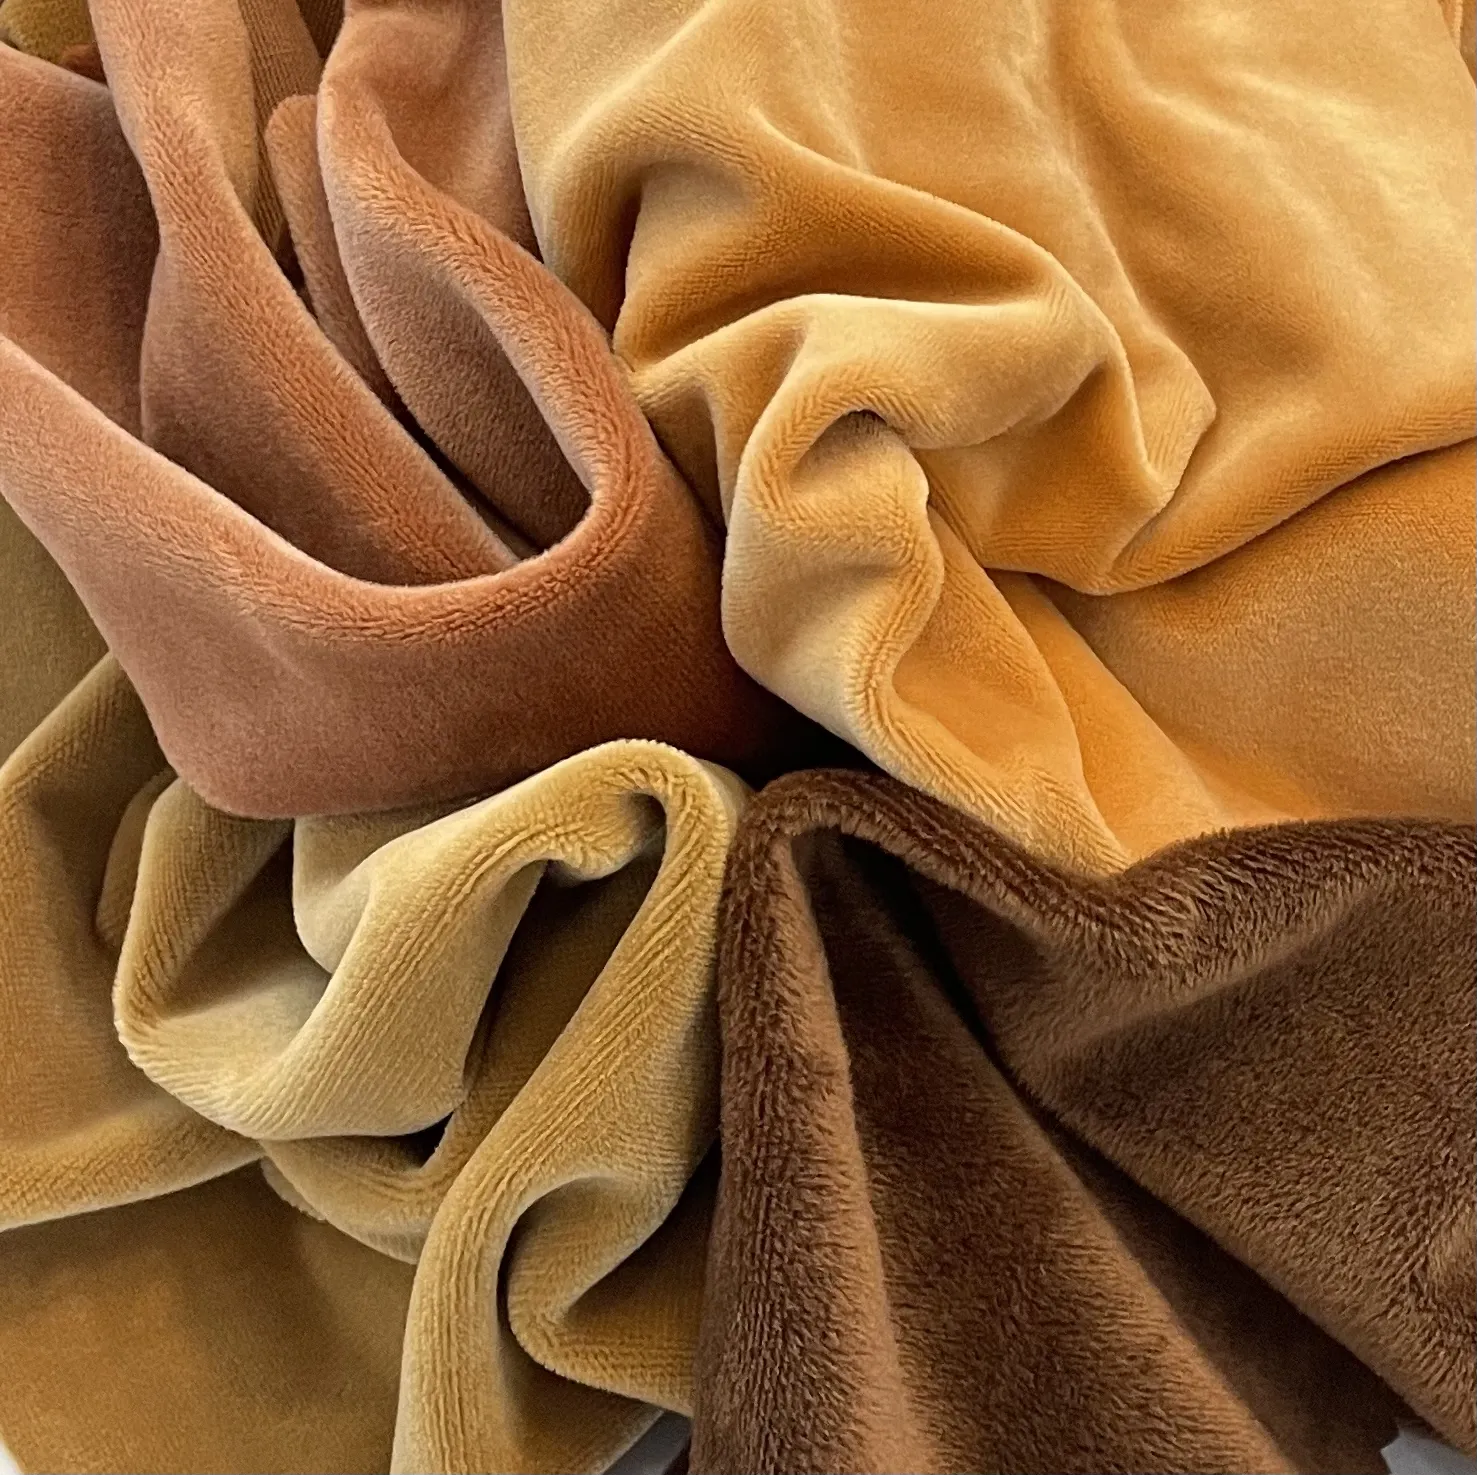 Multiwarna 100 Polyester kain velour super lembut kain beludru untuk set piyama untuk wanita